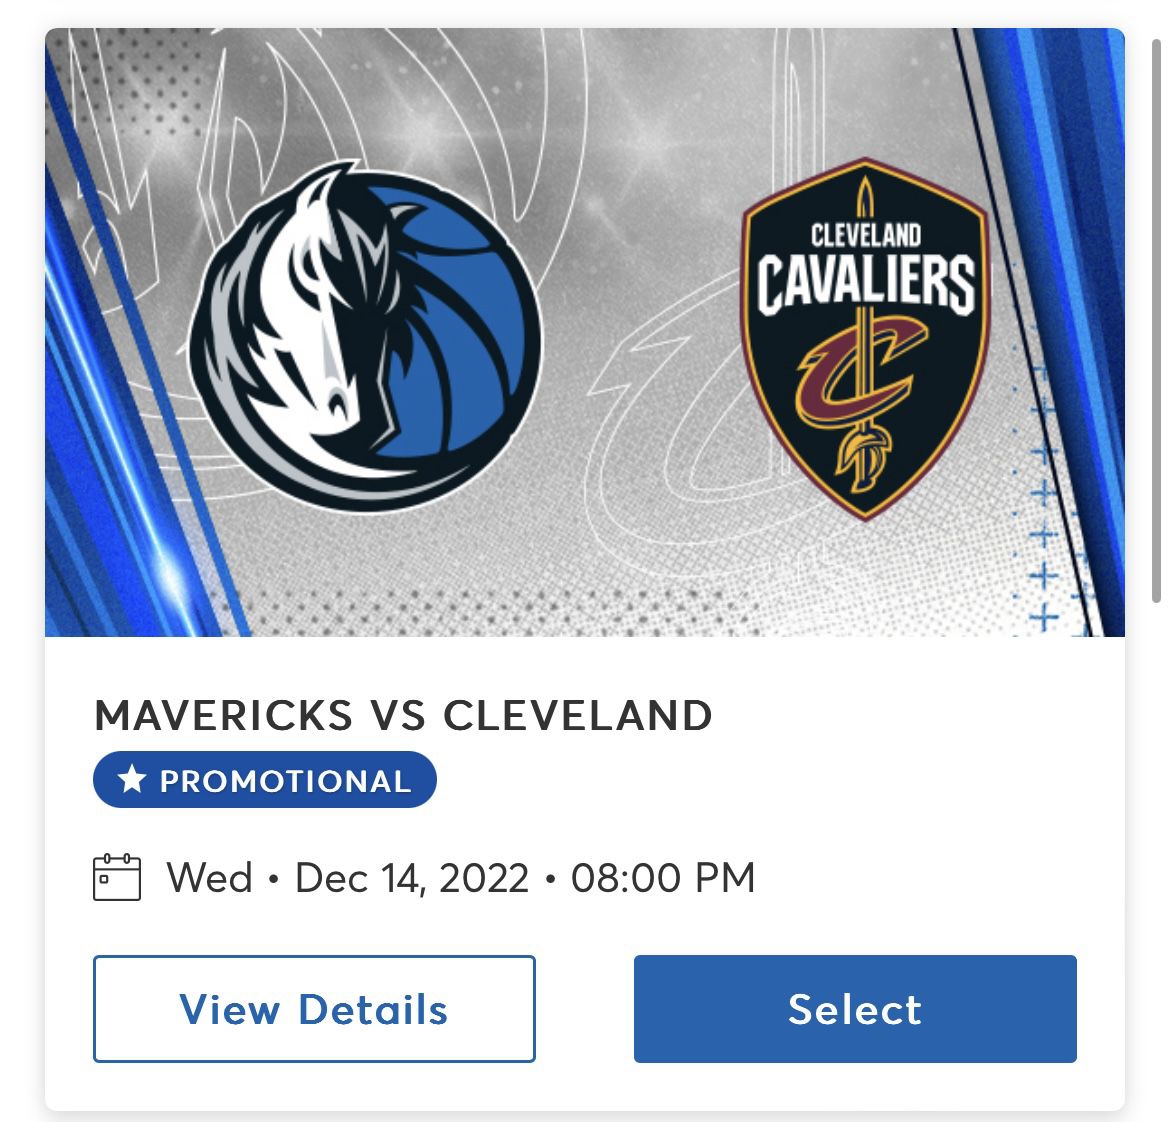 Mavs vs Cavs $30 for 2 tickets